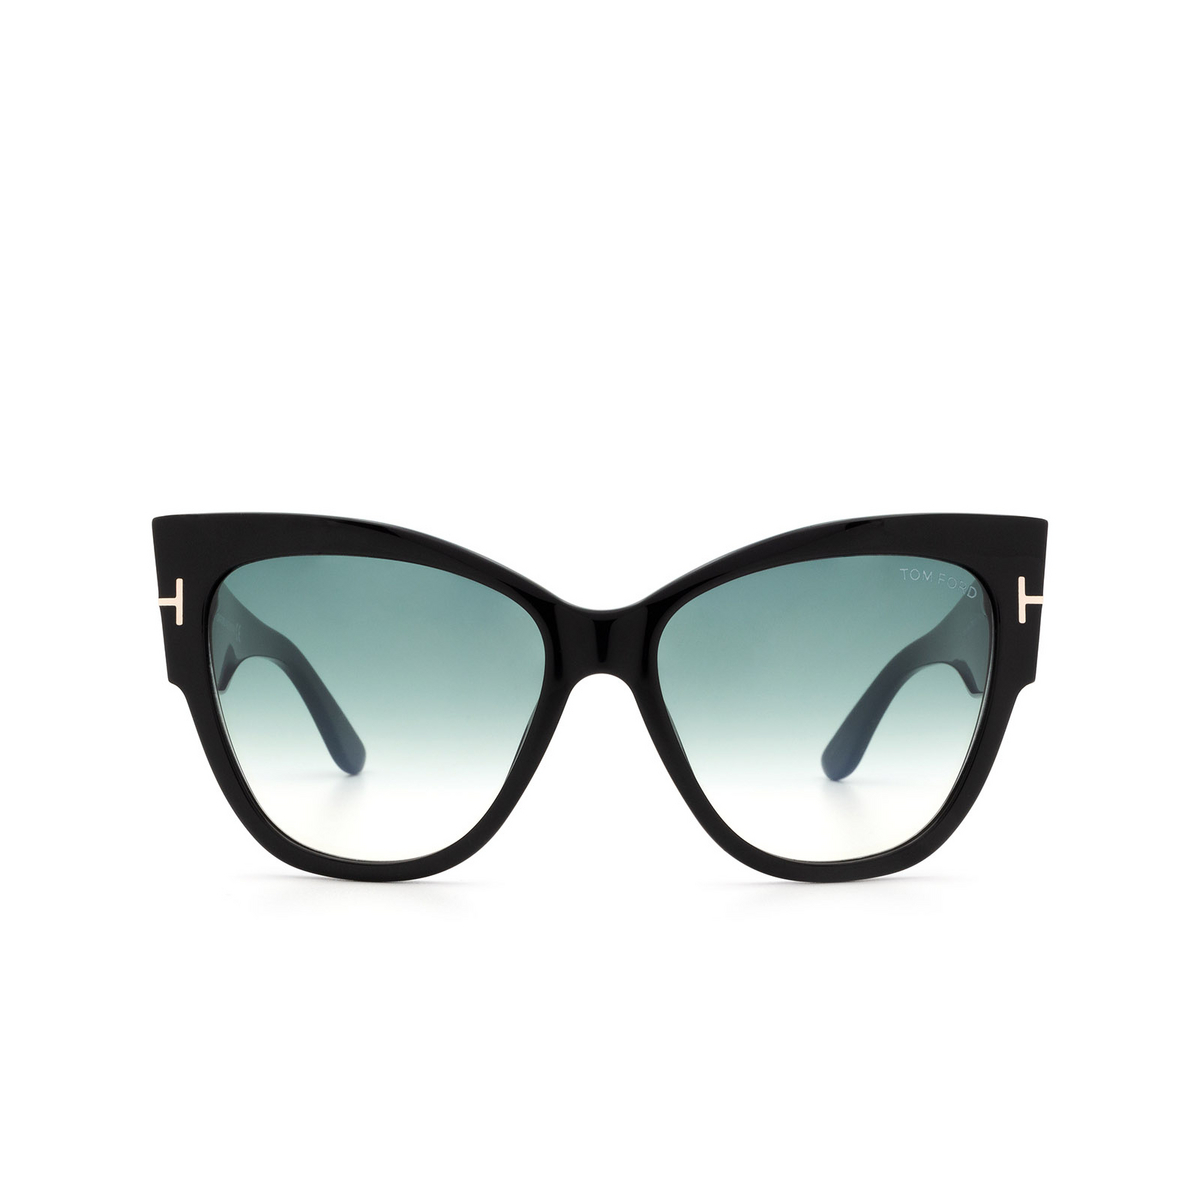 Tom Ford ANUSHKA Sunglasses 01B Shiny Black - front view